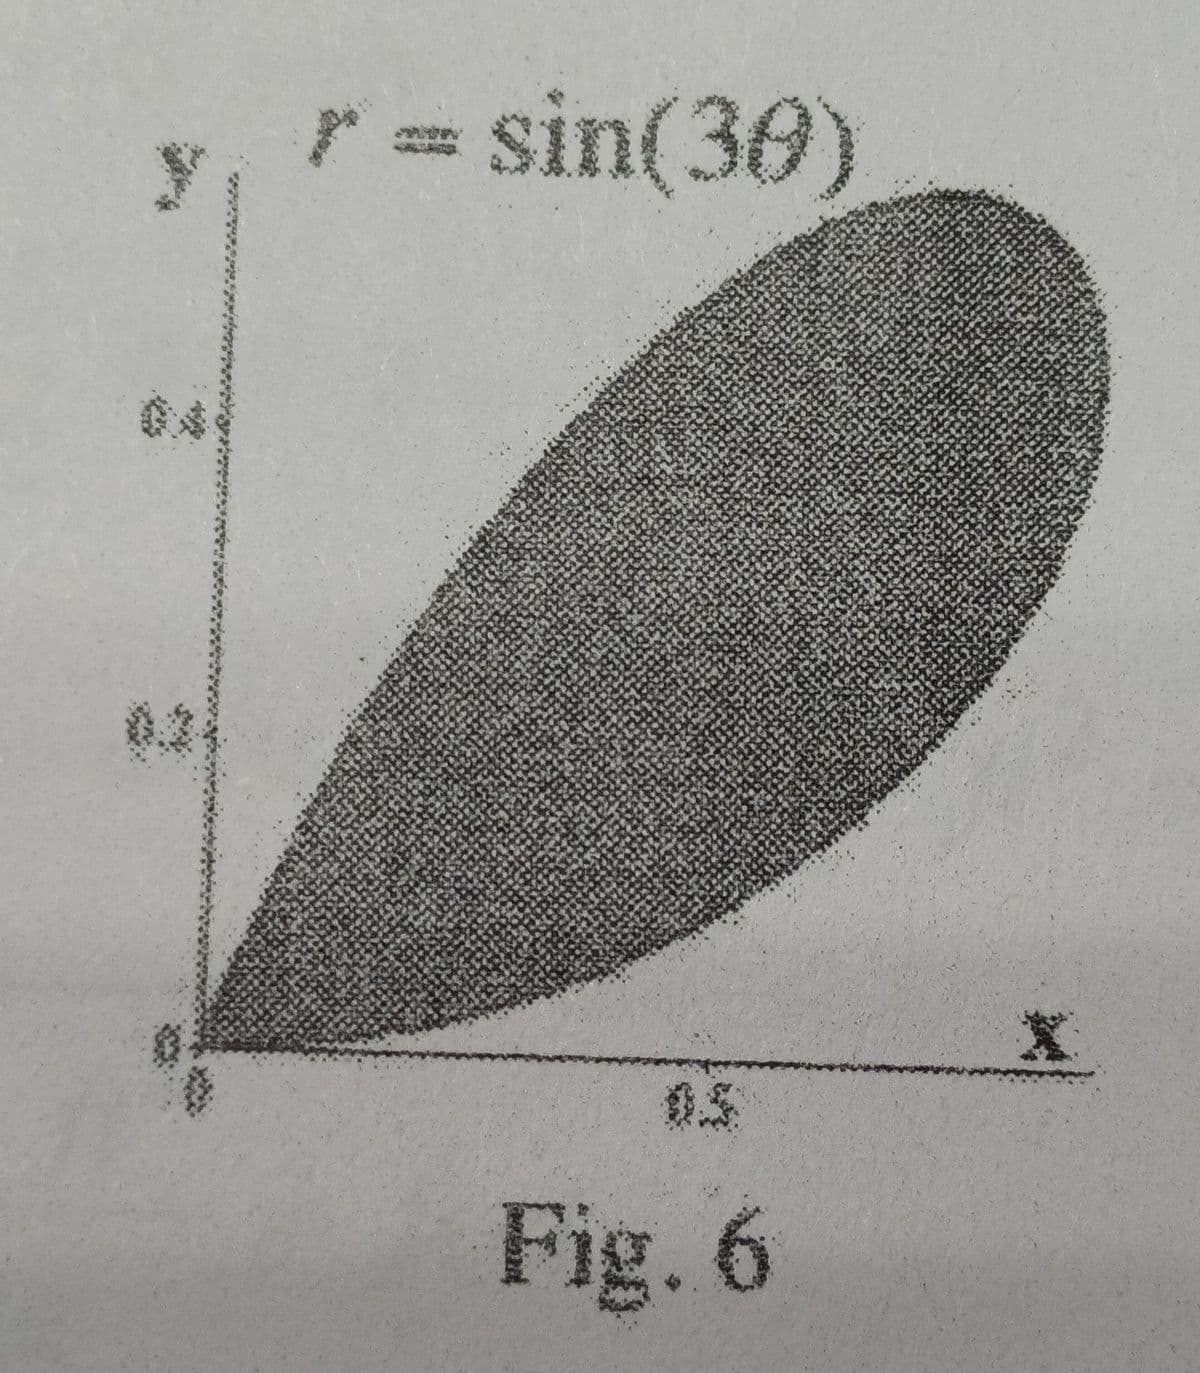 sin(36
0.5
Fig. 6
